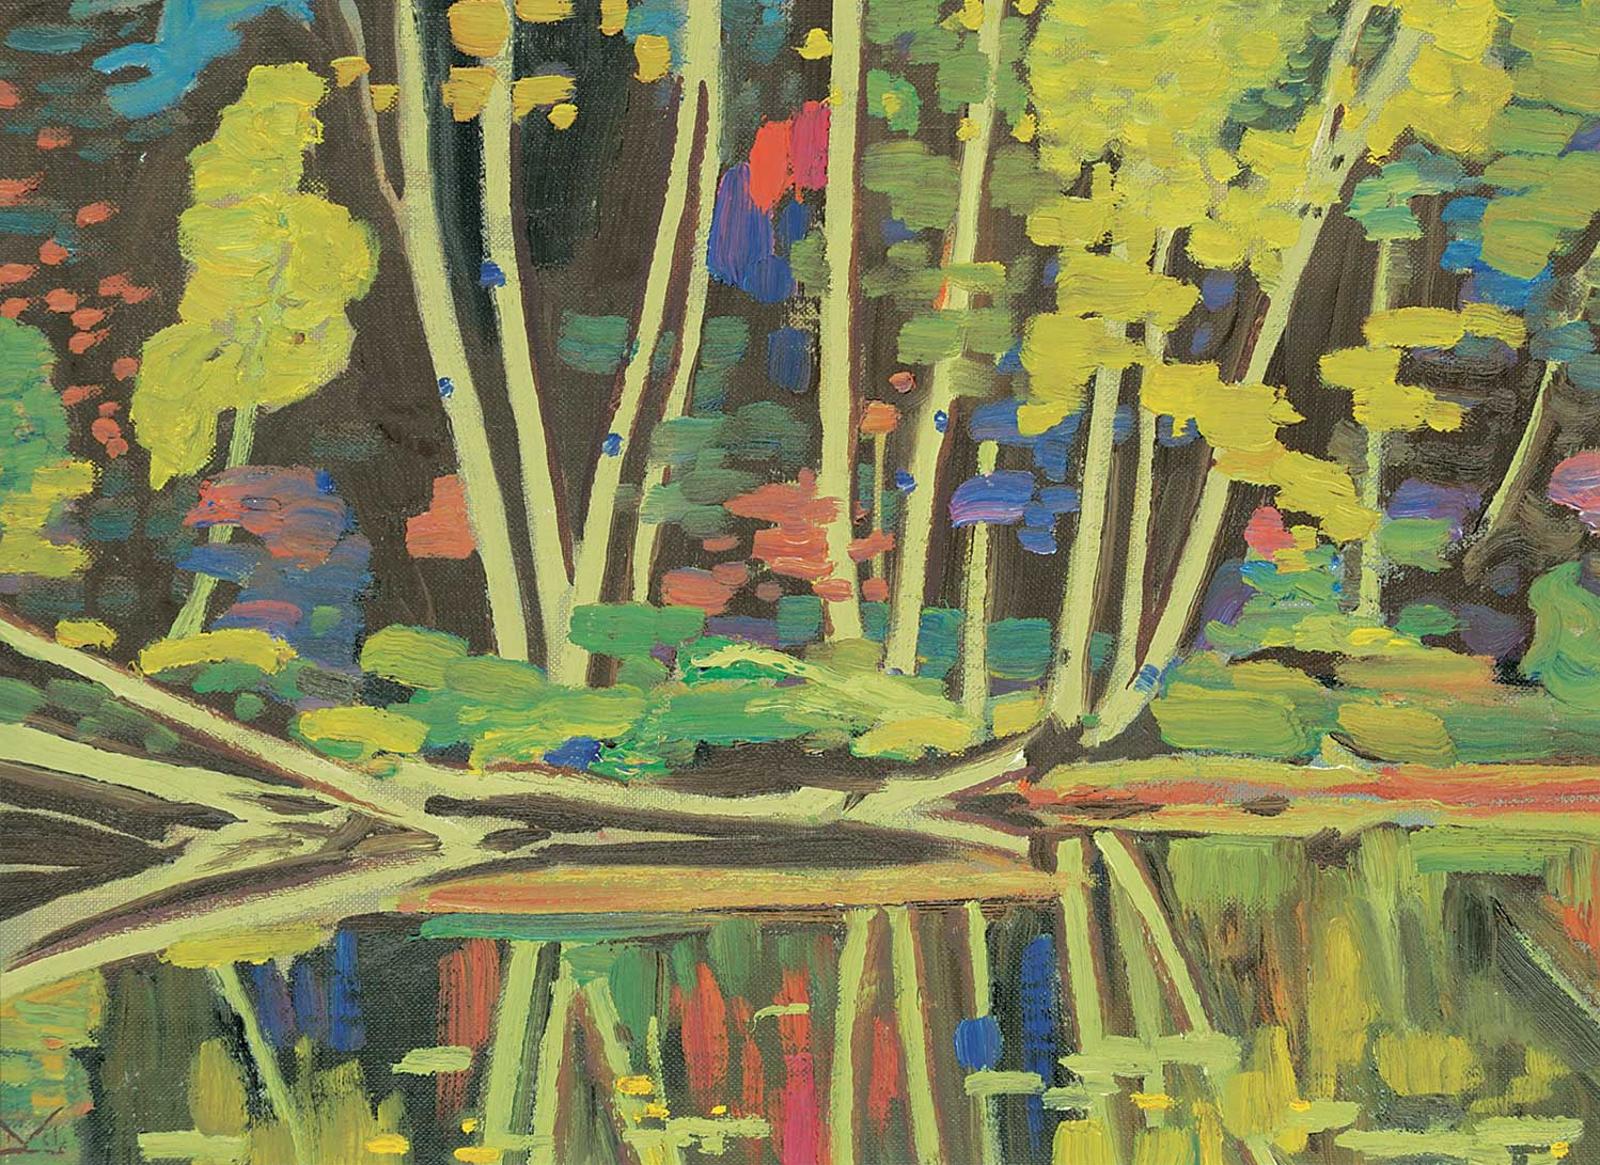 Illingworth Holey (Buck) Kerr (1905-1989) - Birches, Autumn Ontario